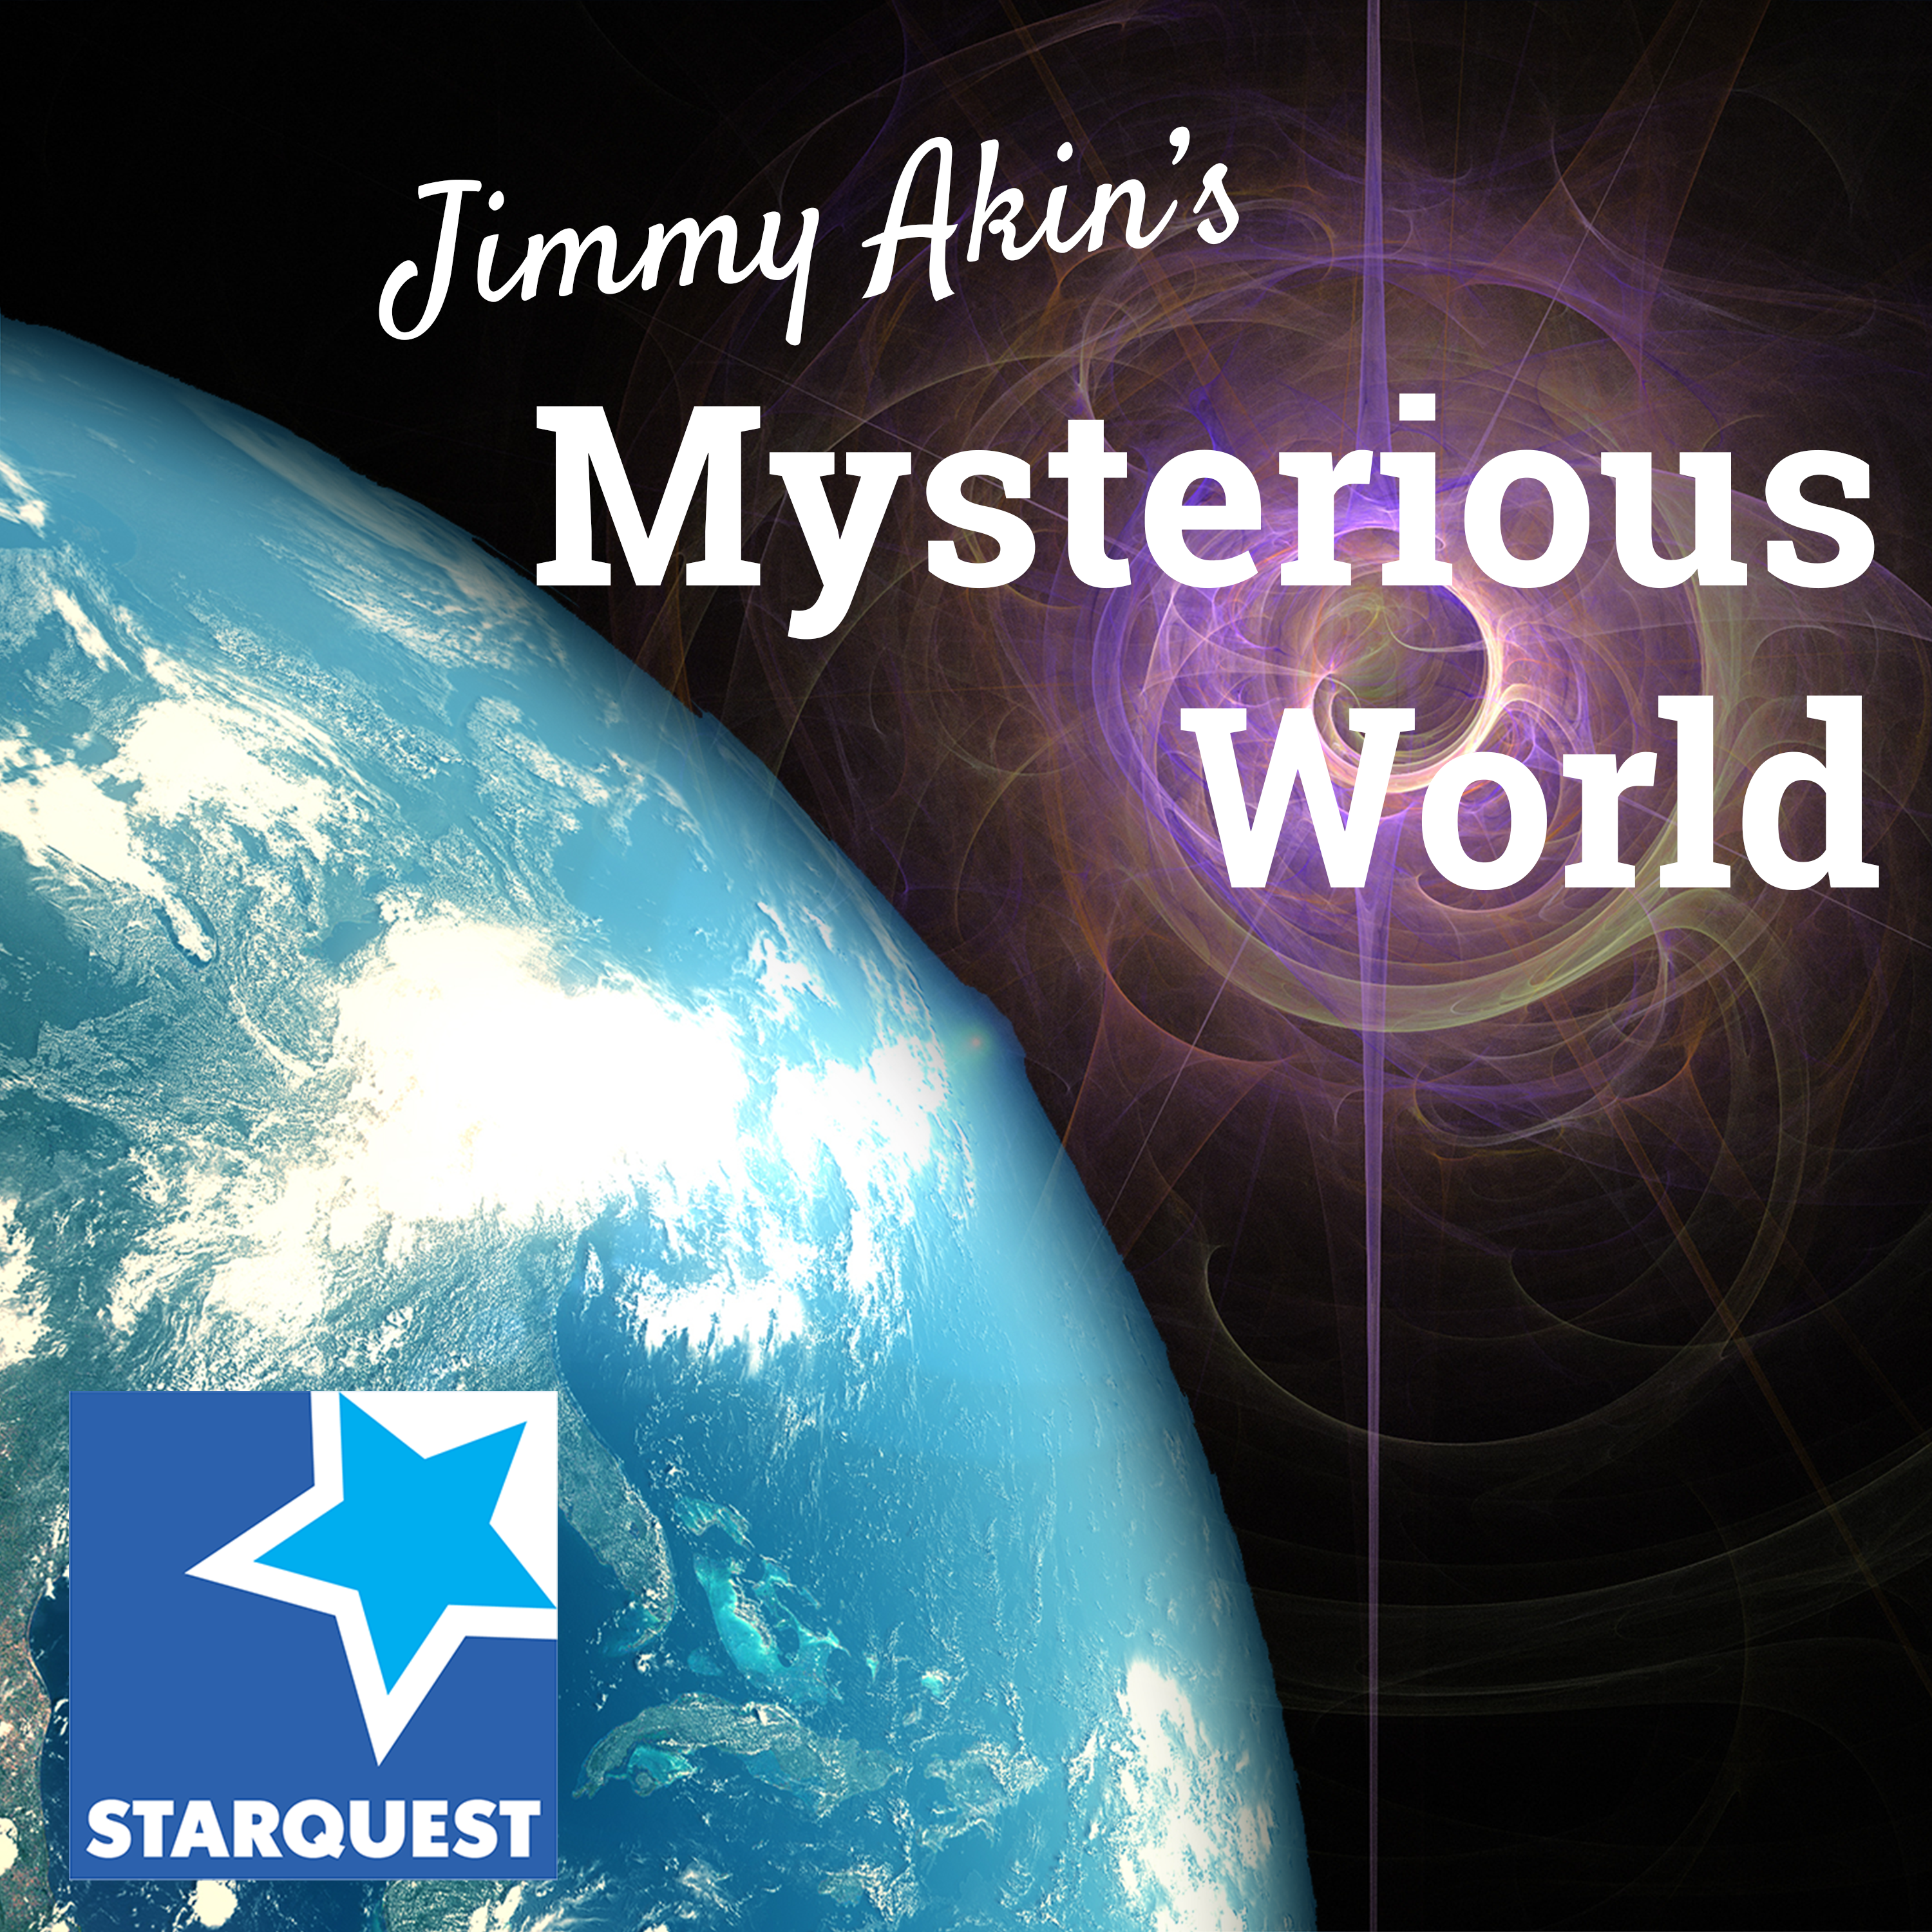 Jimmy Akin’s Mysterious World